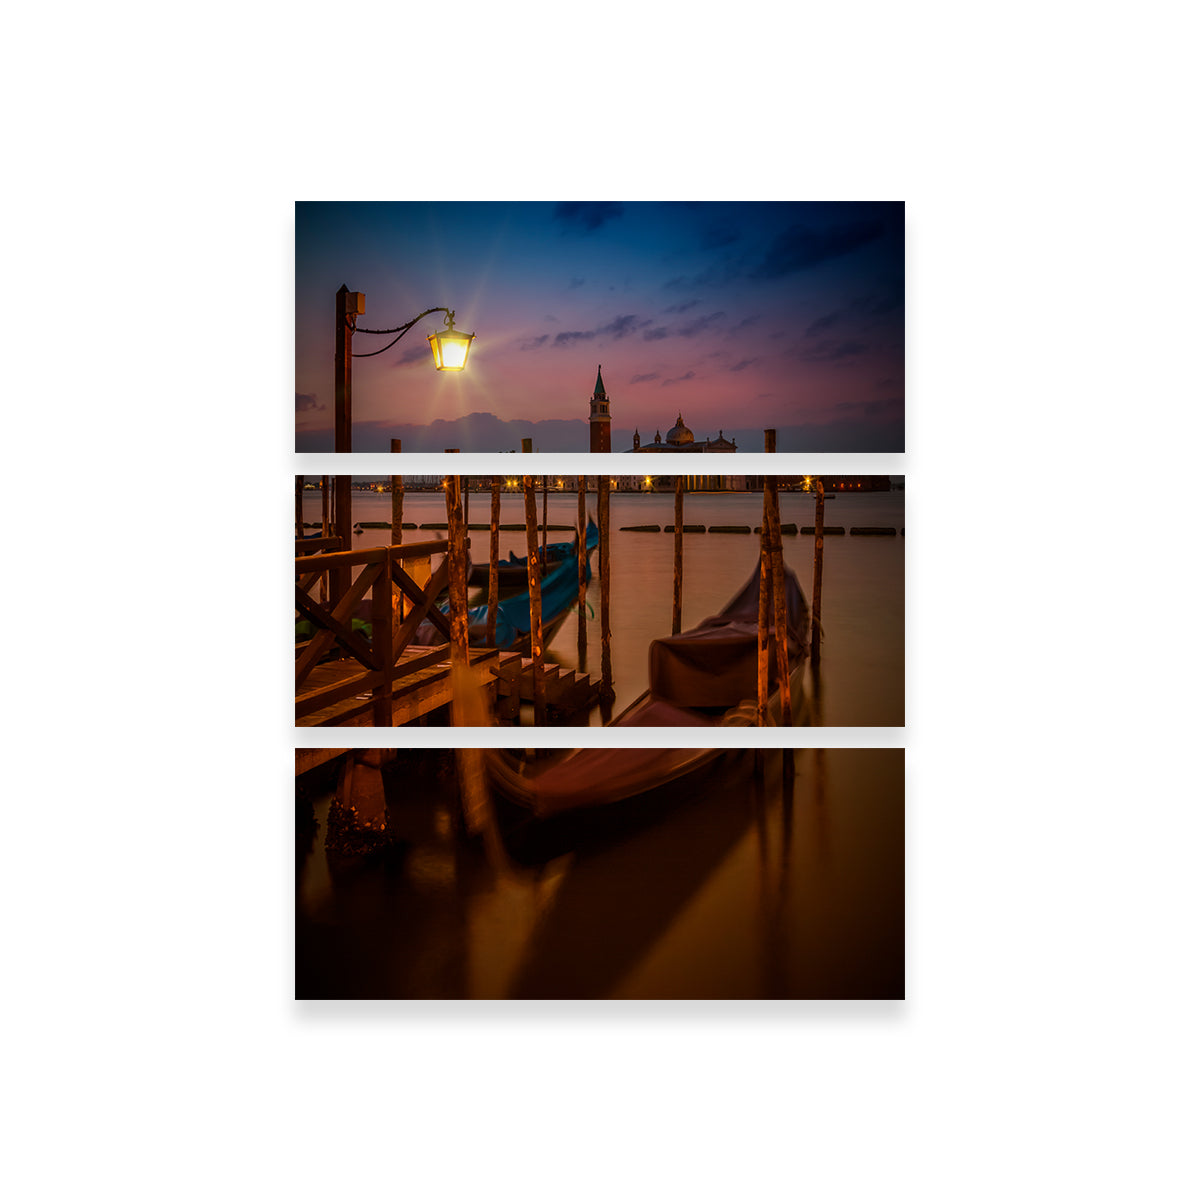 Venice Gondolas During Blue Hour